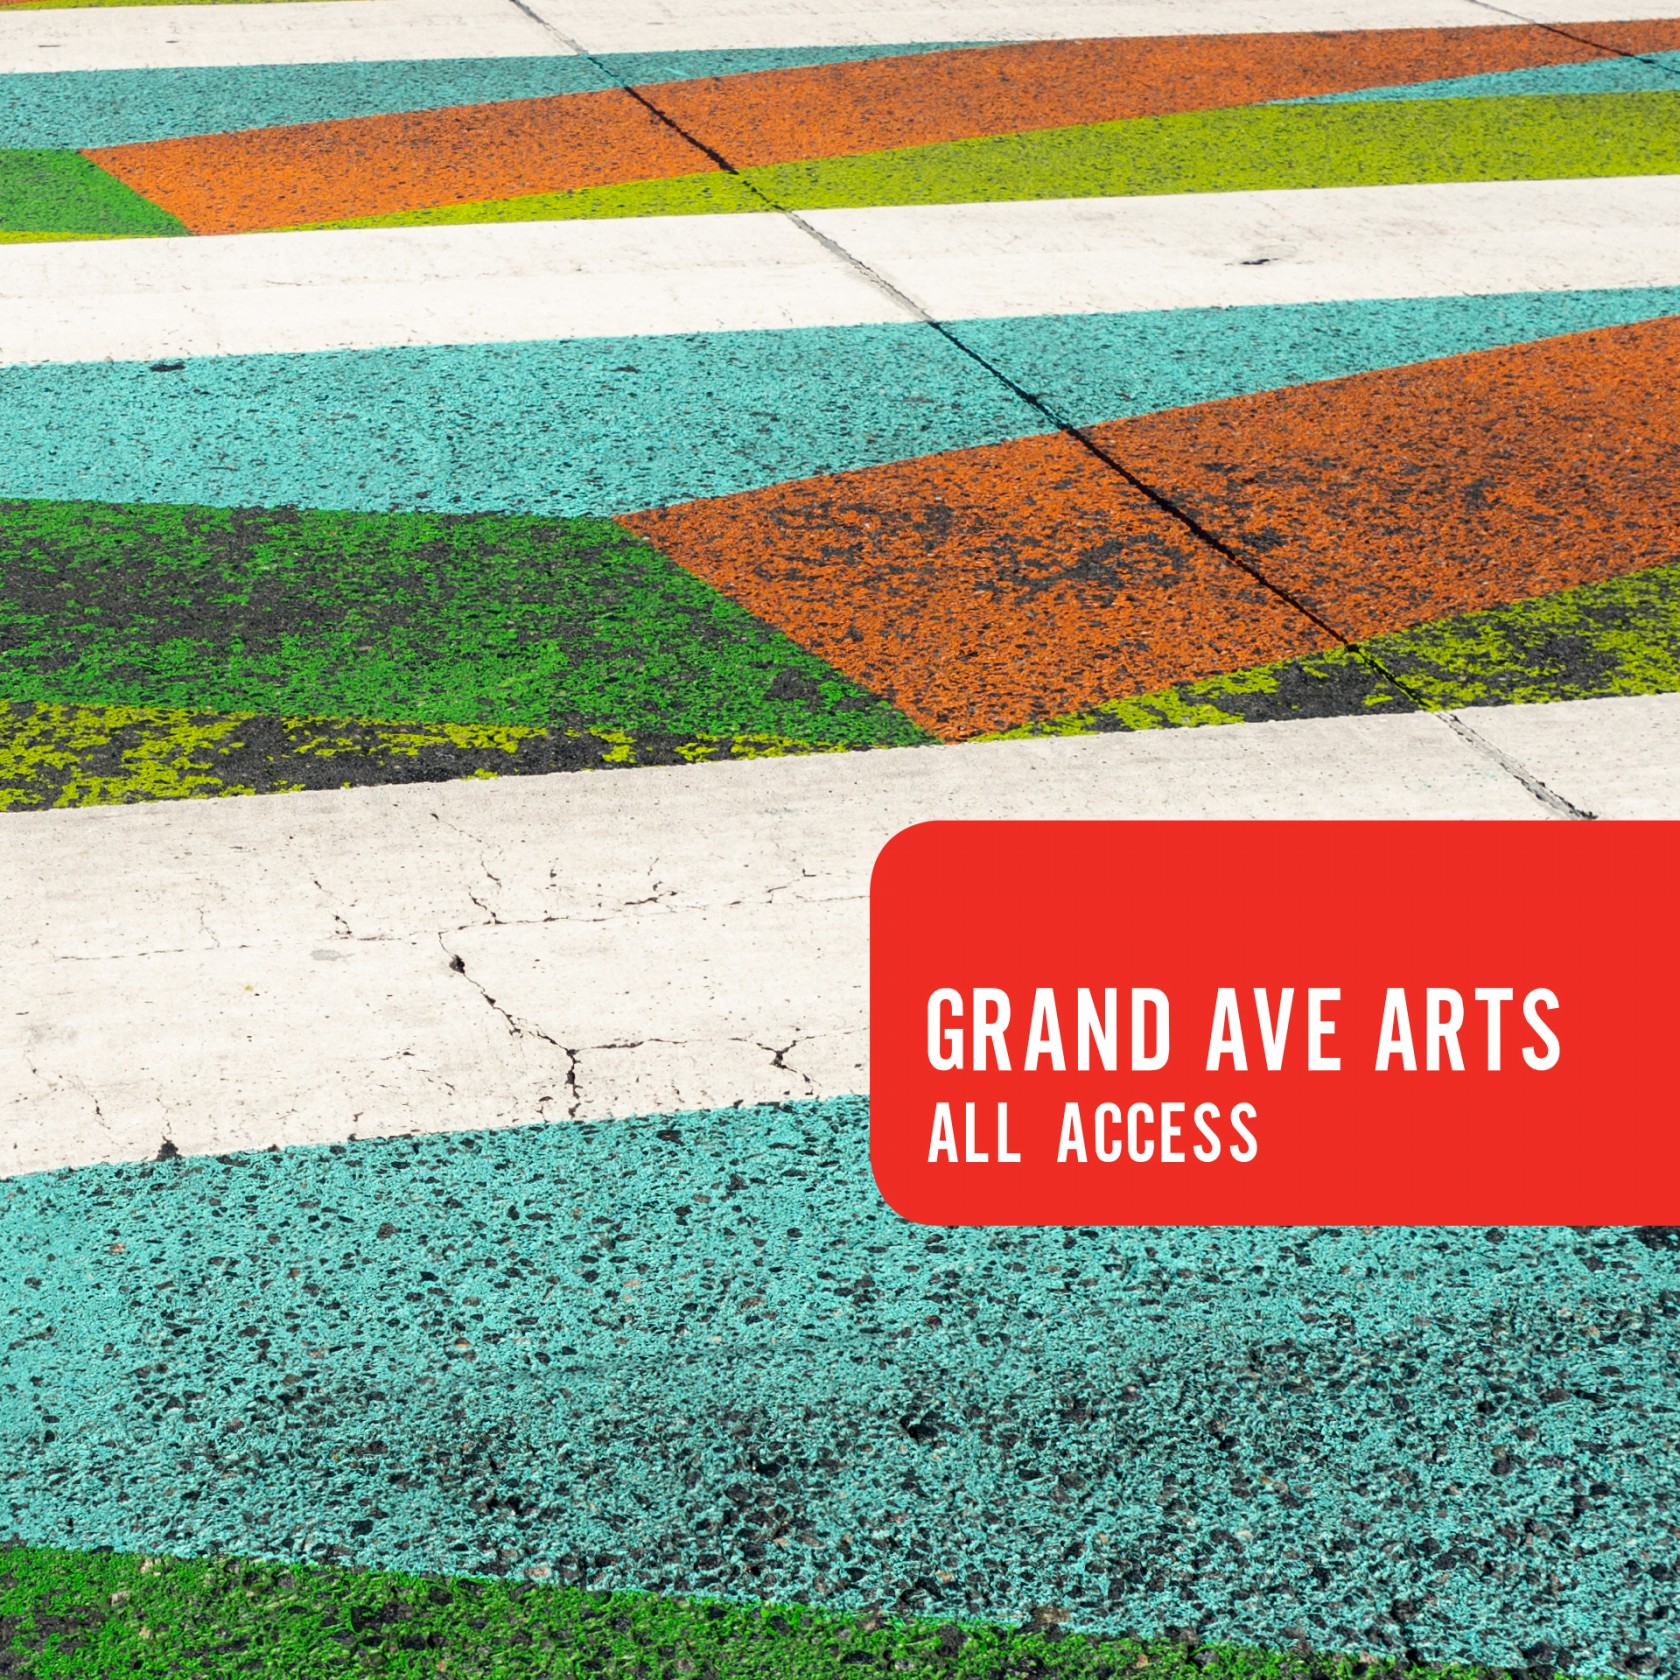 Grand Ave Arts: All Access 2018